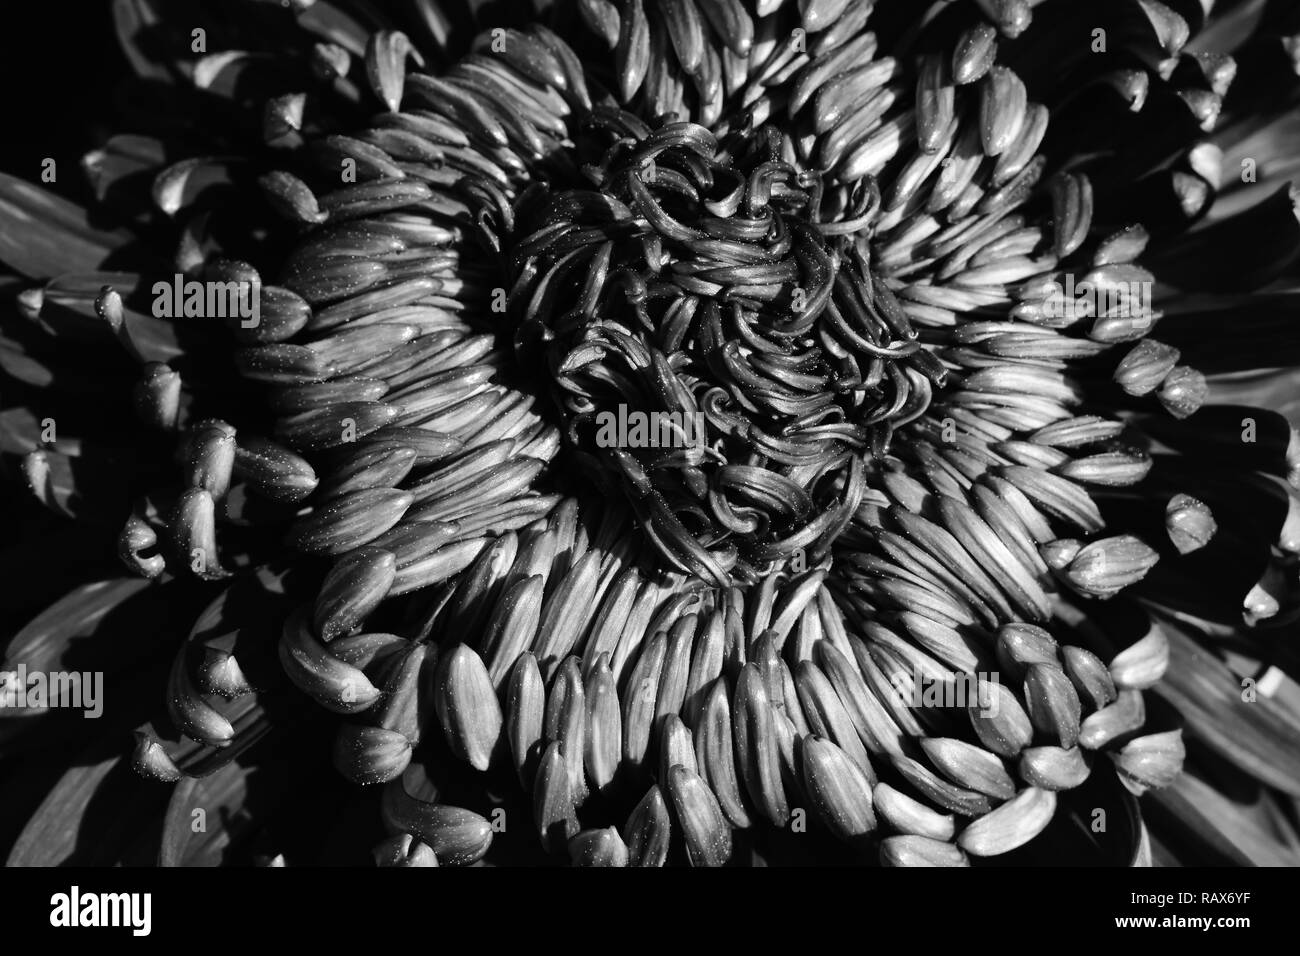 Closeup of a chrysanthemum flower in monochrome. Stock Photo